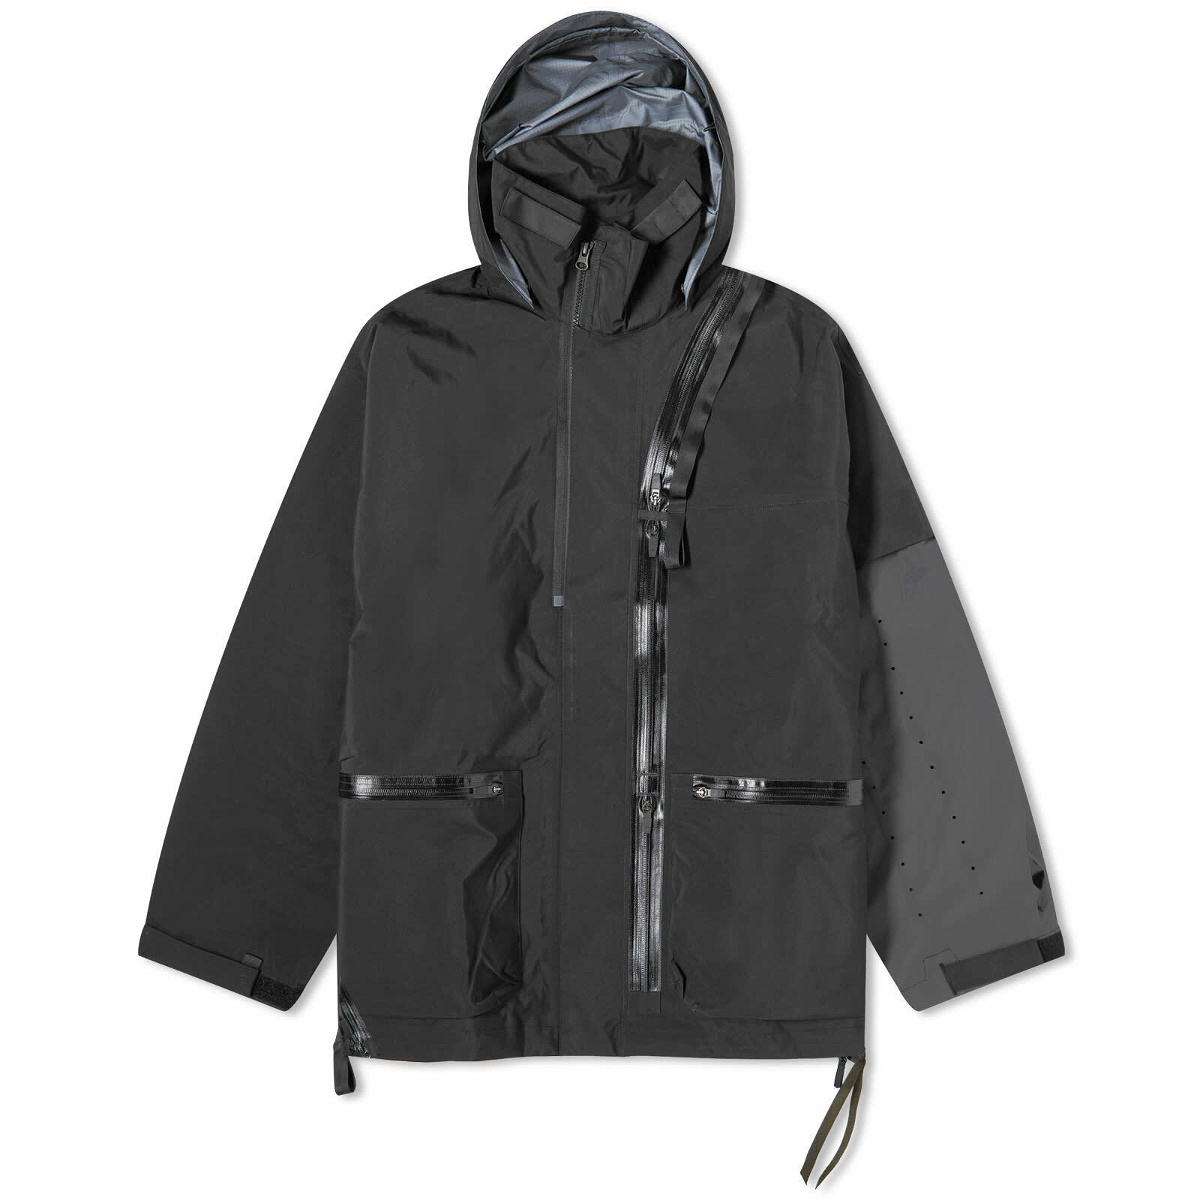 Photo: Acronym Men's 3L Gore-Tex Pro Interops Hard Shell Jacket in Black